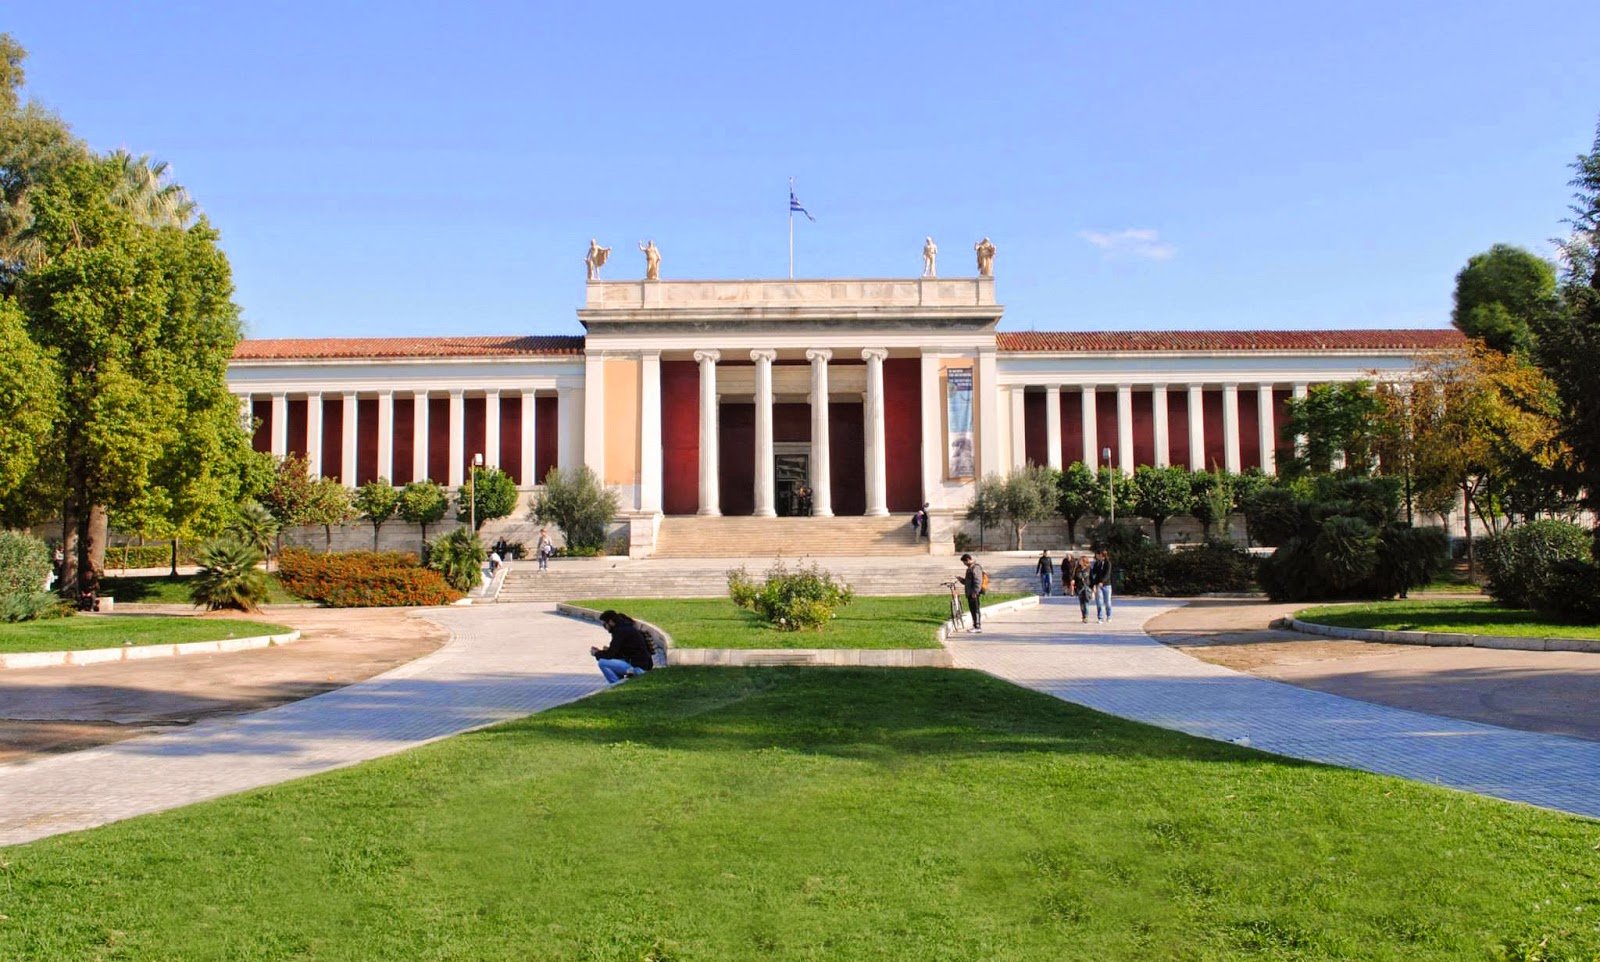 More information about "Προκηρύχθηκε ο αρχιτεκτονικός διαγωνισμός για την κατασκευή του νέου Αρχαιολογικού Μουσείου Αθηνών"